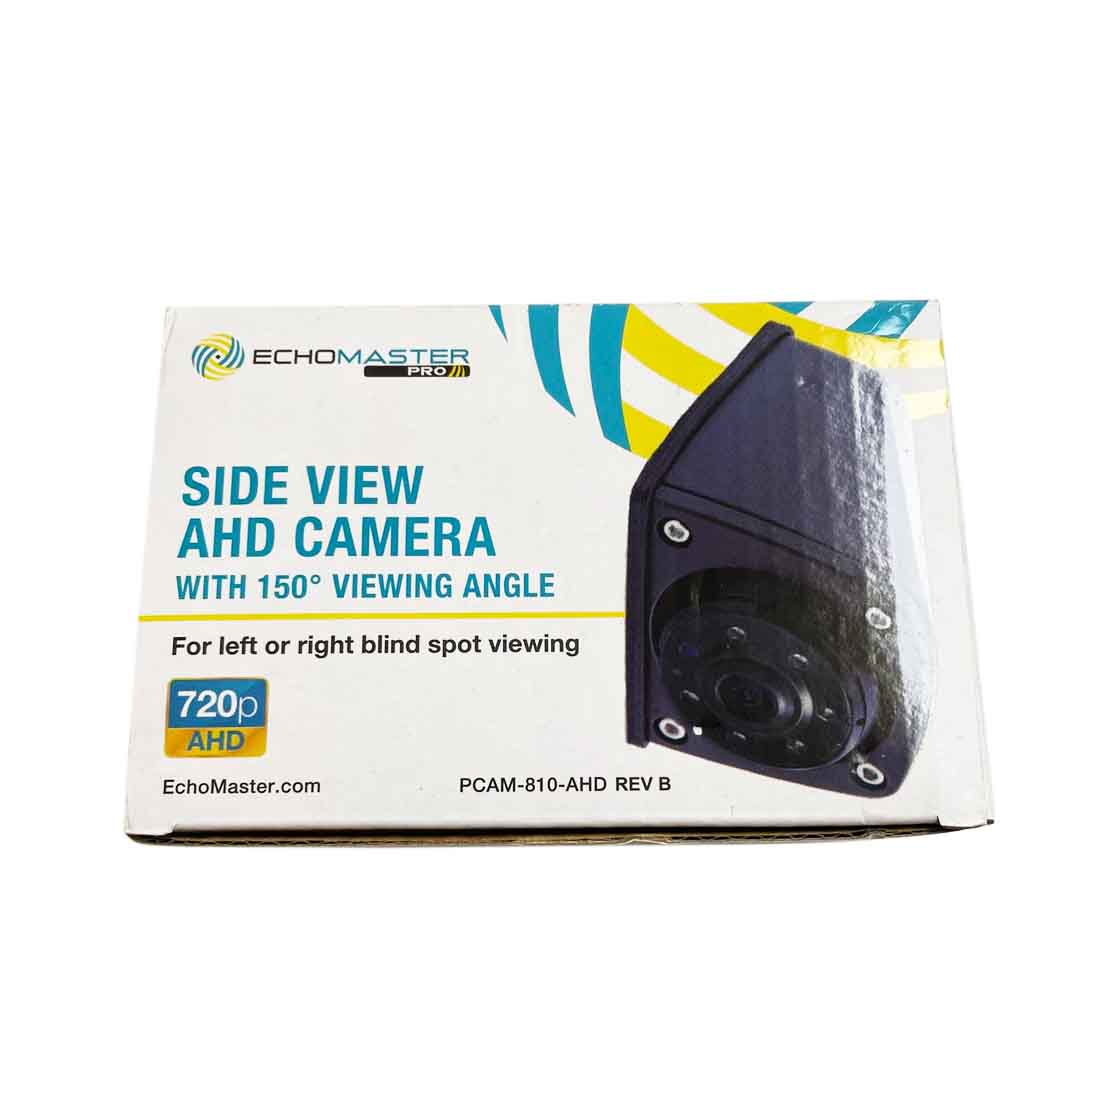 EchoMaster PCAM-810-AHD REV B Side View 720p AHD Camera w/ 150° Viewing Angle